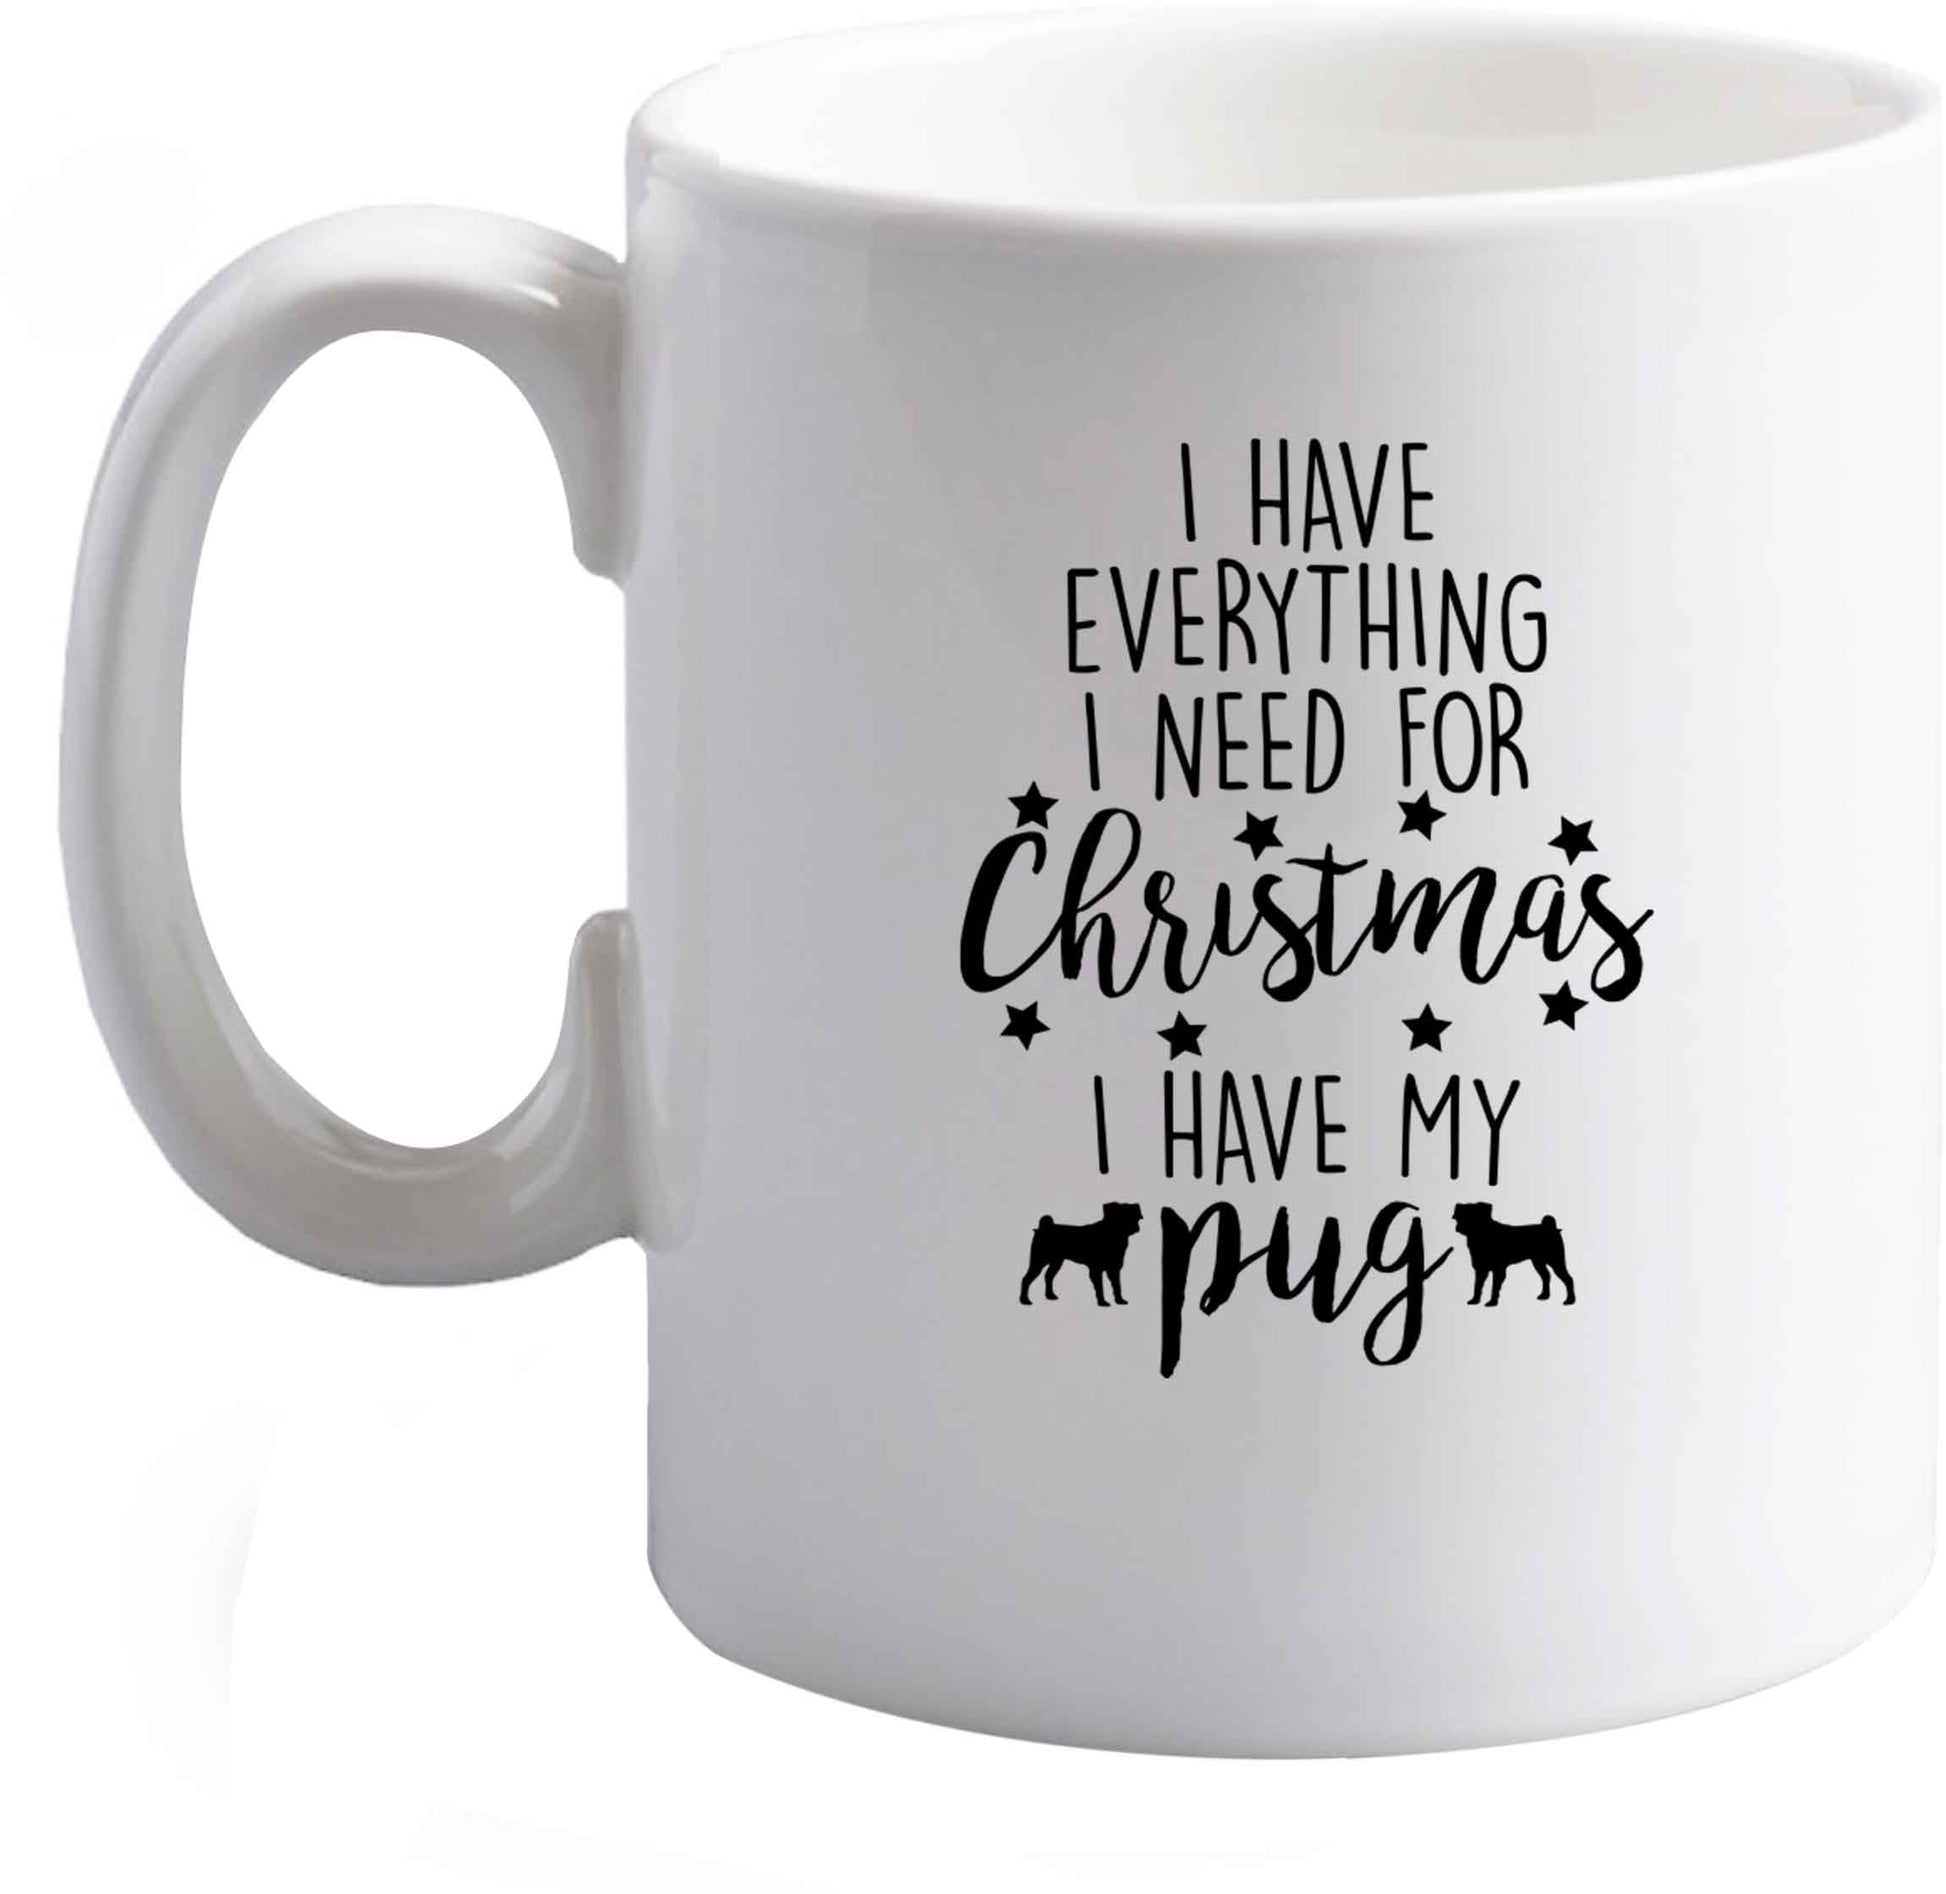 10 oz I have everything I need for Christmas I have my pug ceramic mug right handed